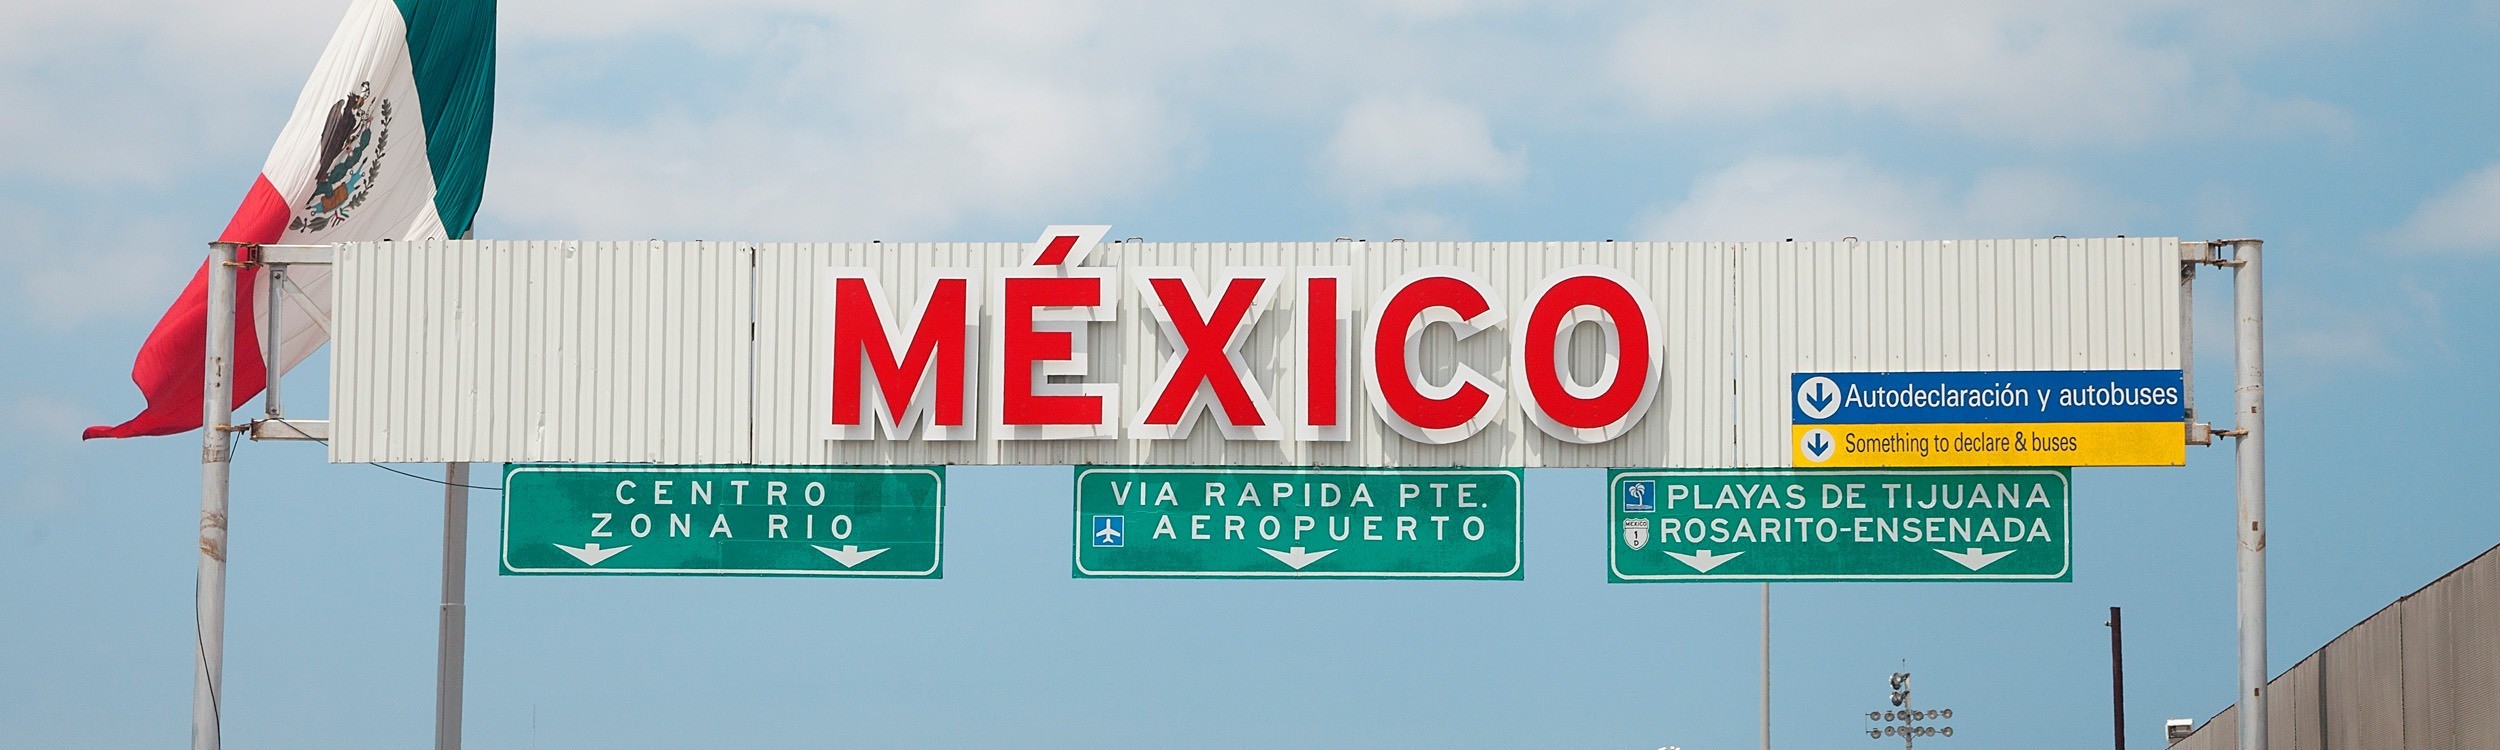 us mexico border entrance in San Diego